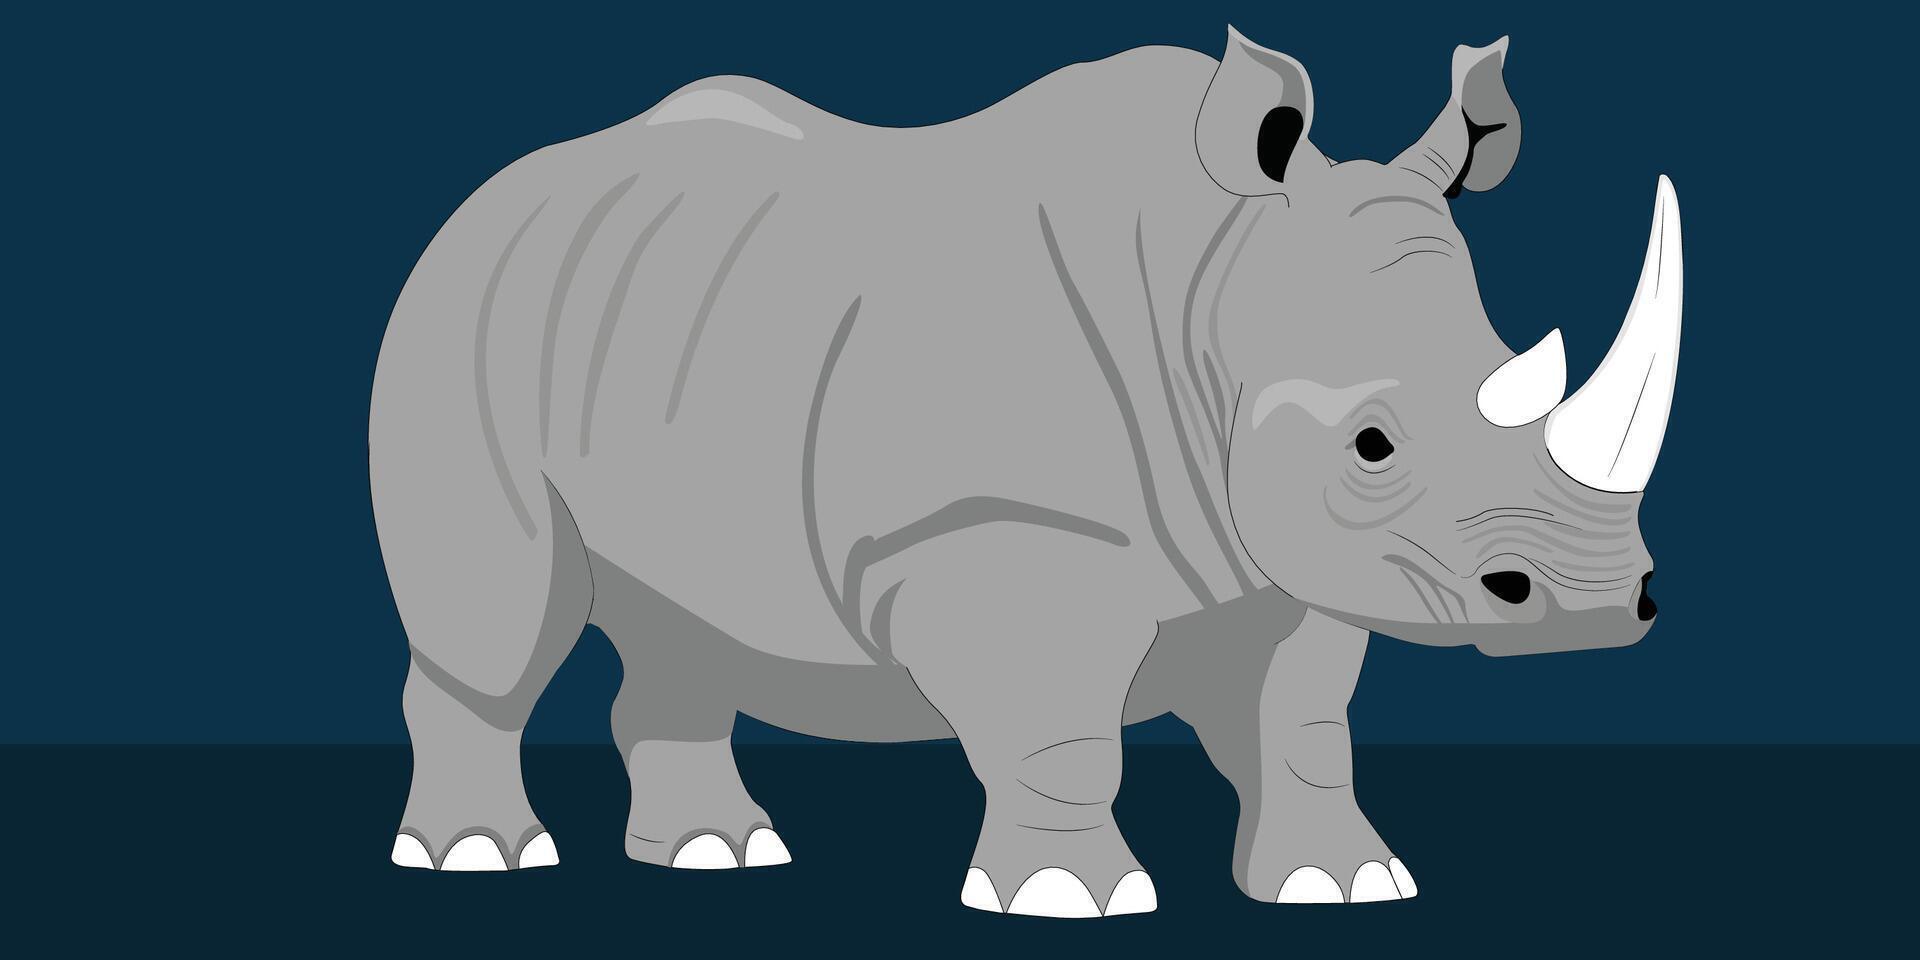 Rhinoceros illustration cartoon character de4sign vector